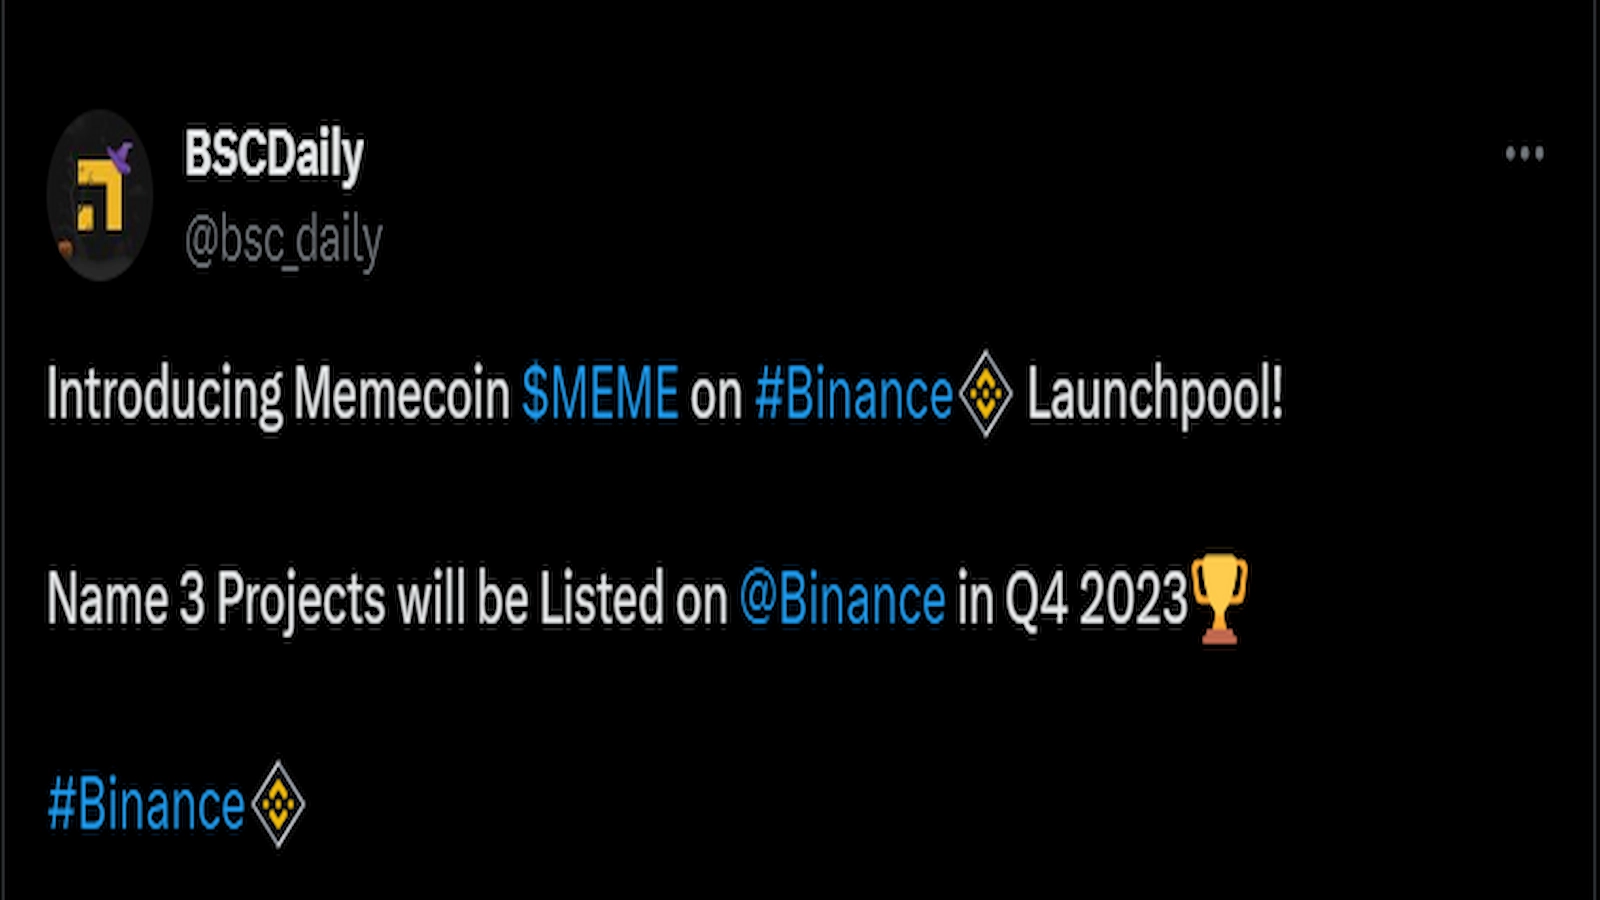 Binance launched Memecoin through its launchpool platform